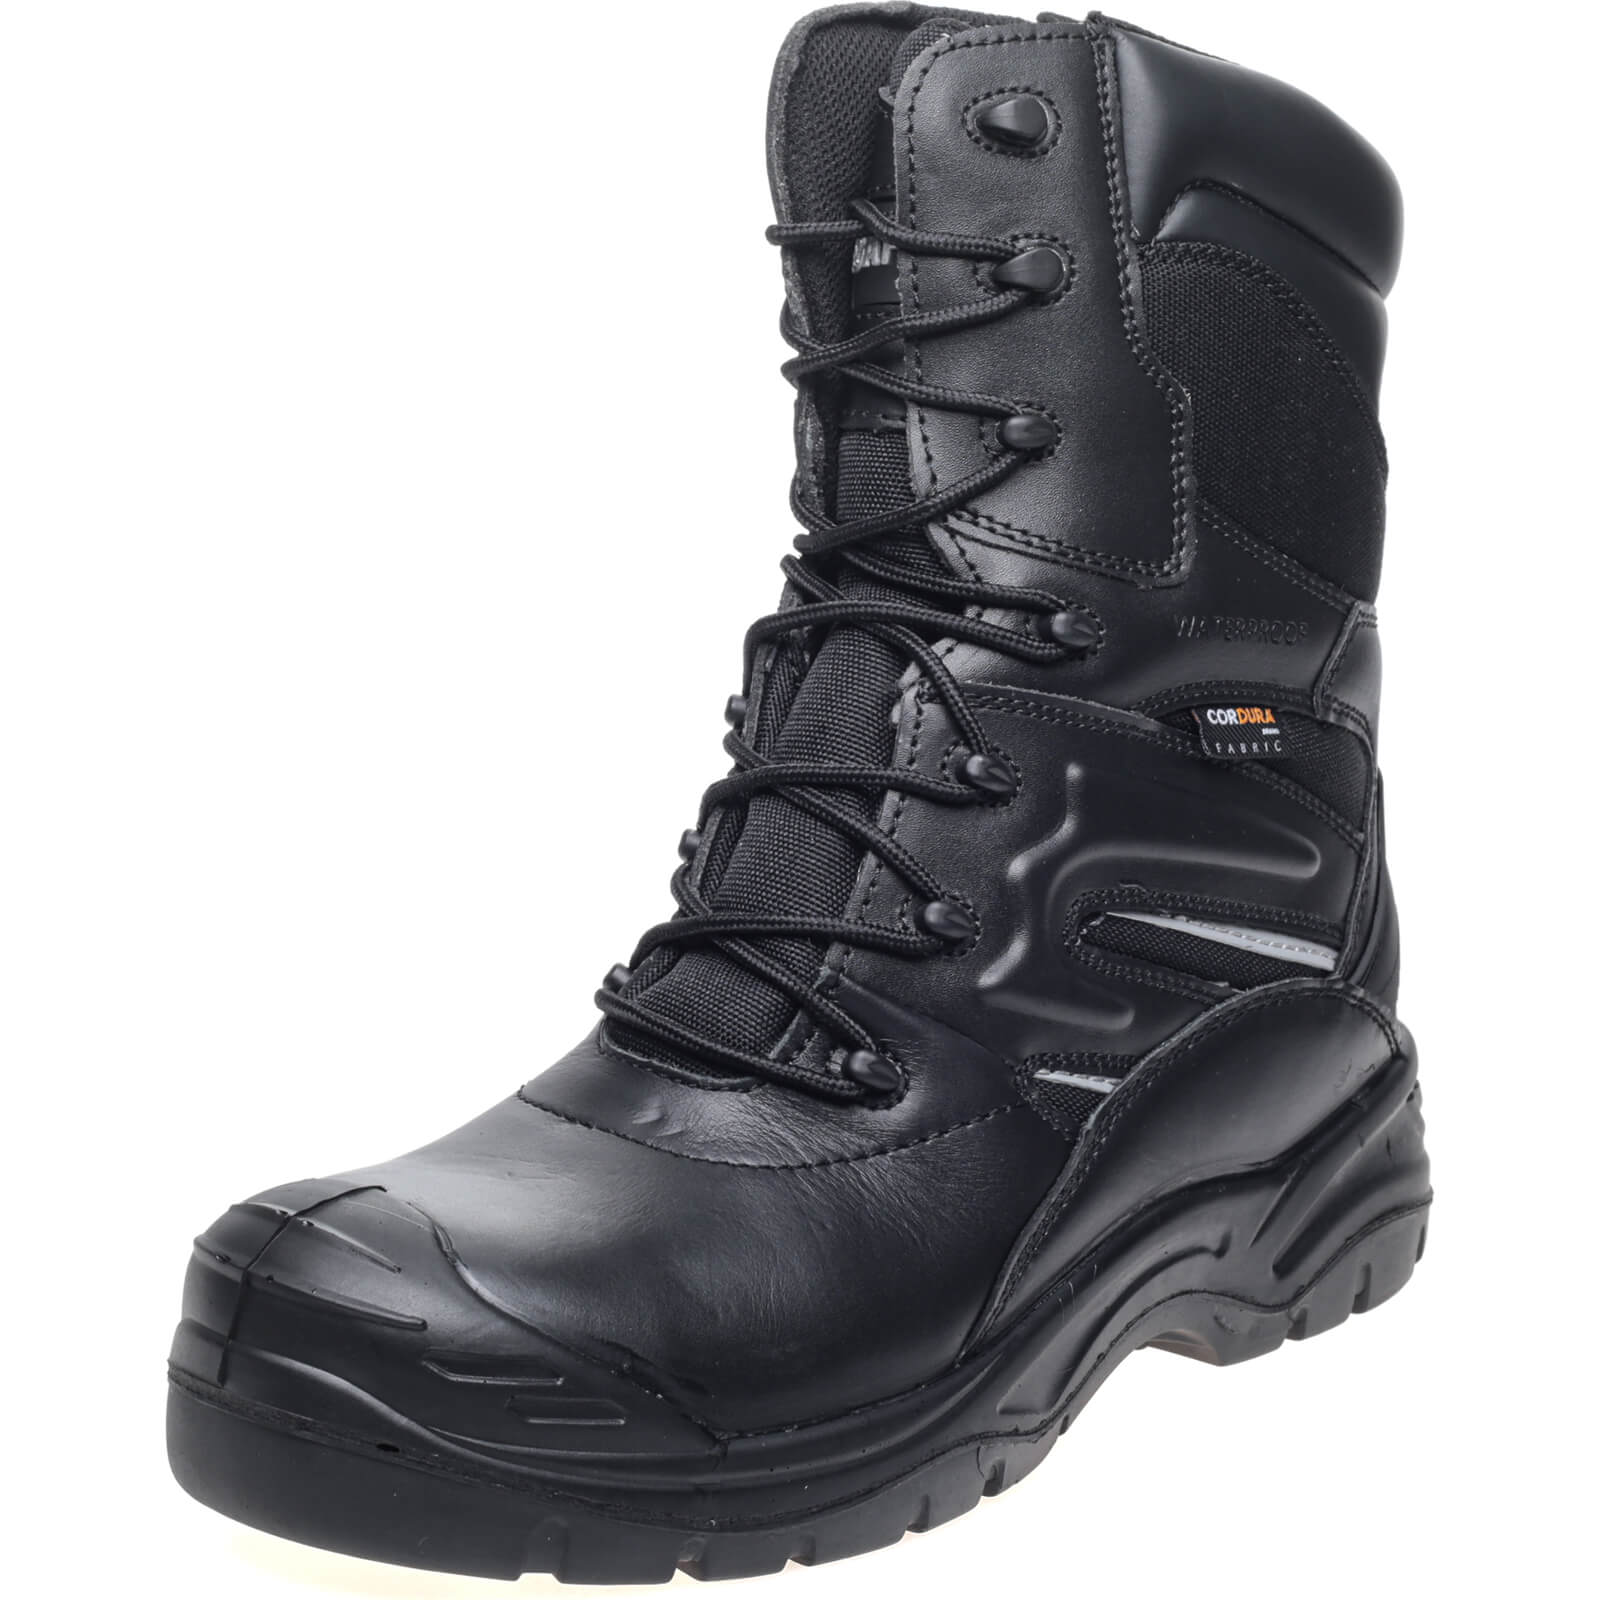 Image of Apache COMBAT Non Metallic High Leg Safety Boots Black Size 8